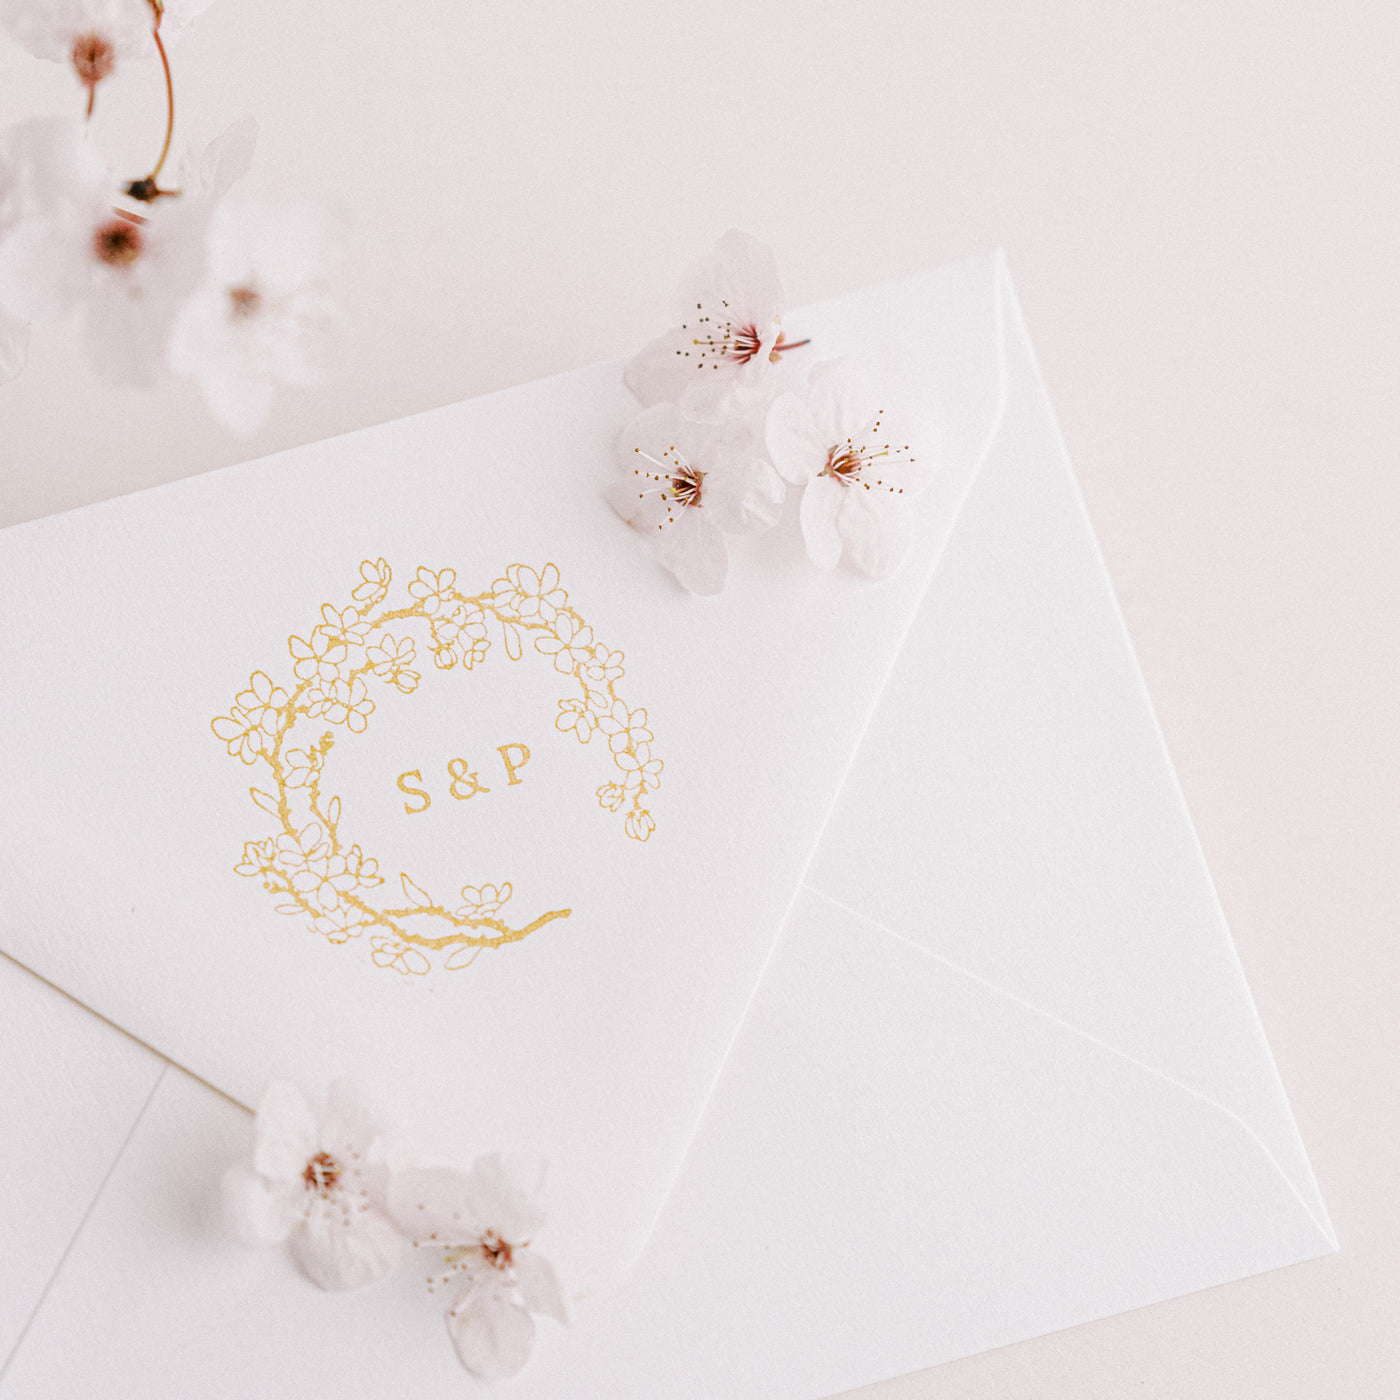 Ichika Cherry Blossom Monogram Rubber Stamp for Fine Art Wedding Invitations | 'Sakura' Cherry Blossom Embellishments for Blush Pink Spring Wedding | Heirloom Seals